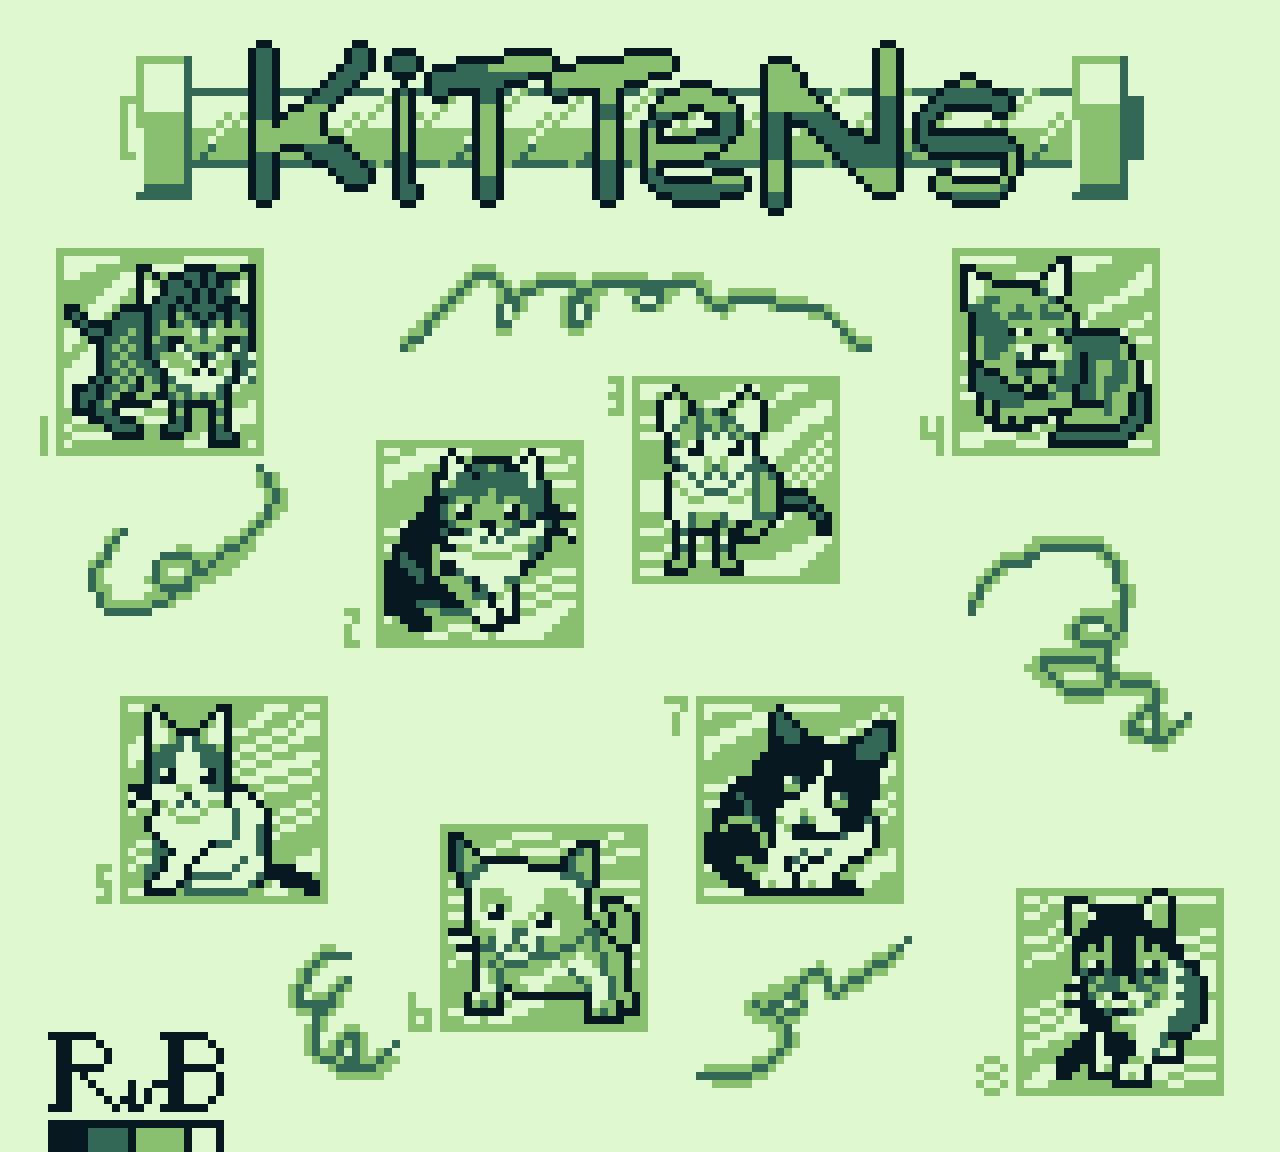 pixel art of 8 kittens as 24 by 24 pixels sprites